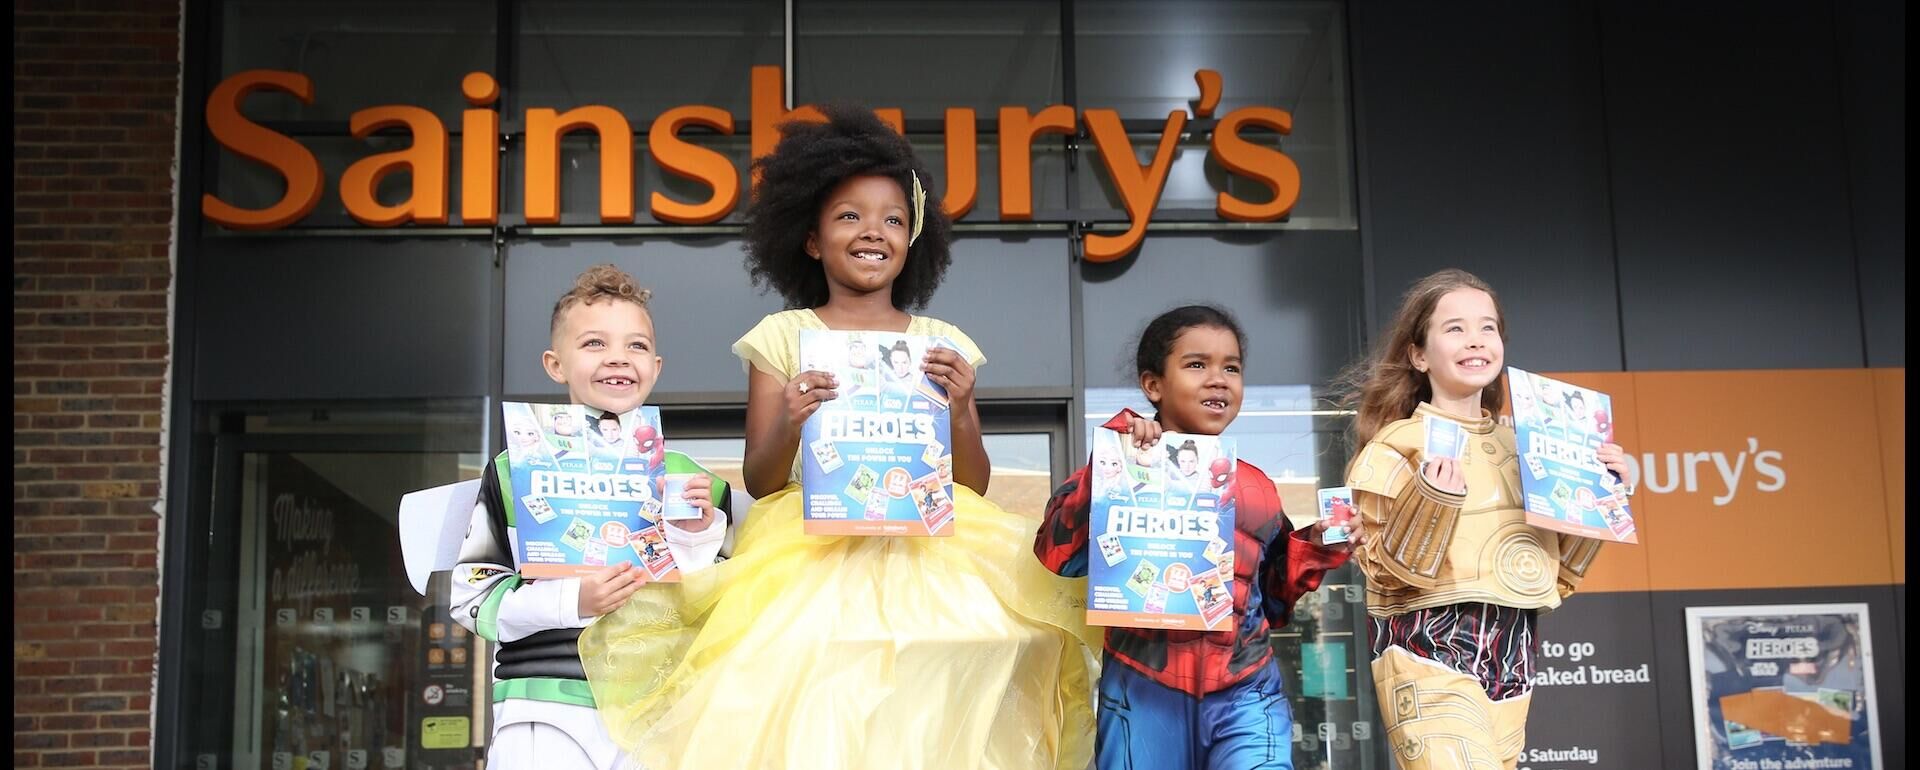 Sainsbury's empowers kids with Disney Heroes